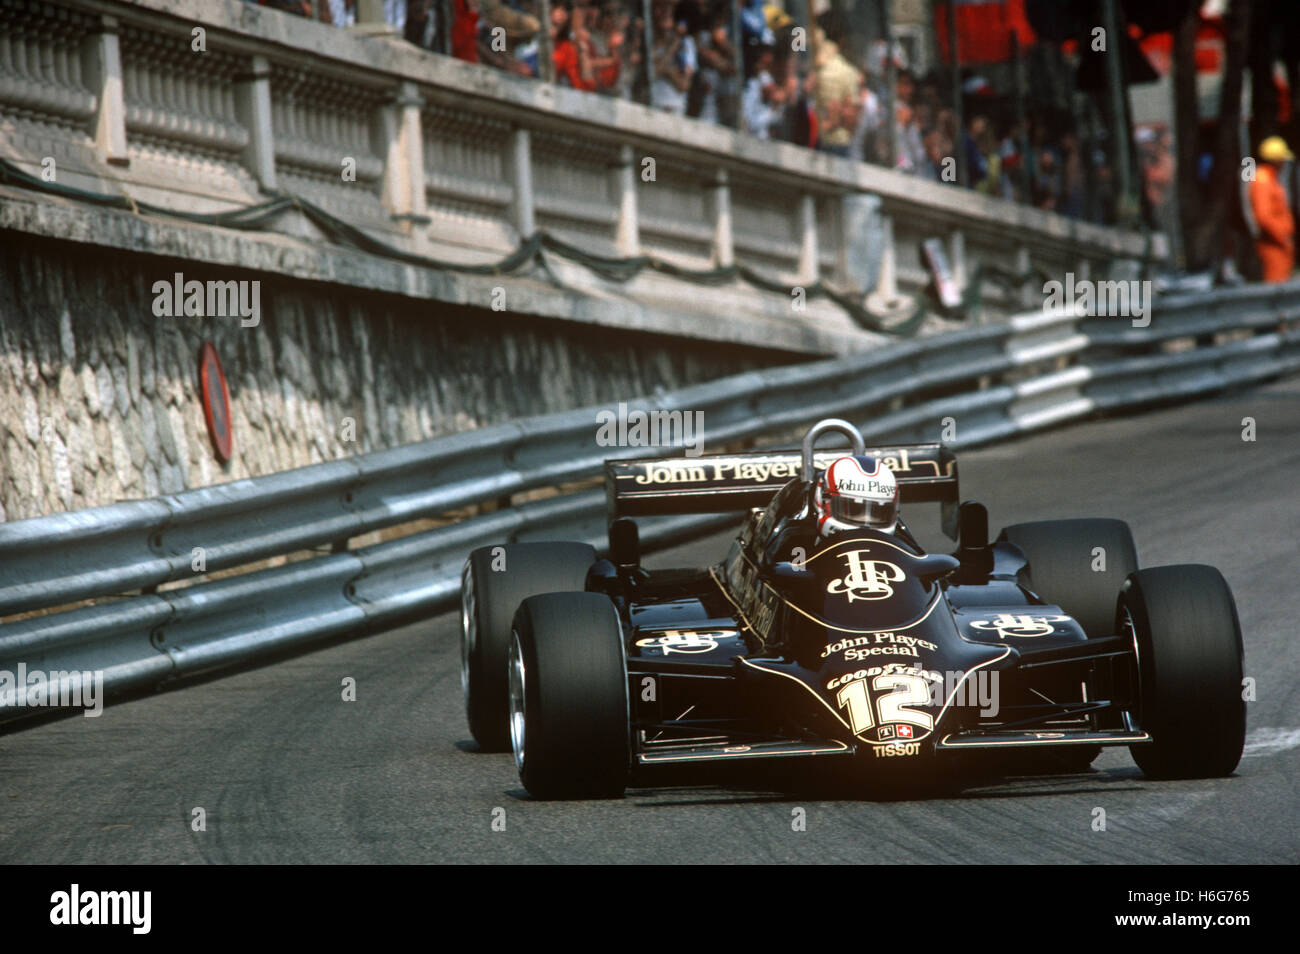 Nigel Mansell Lotus F1 car at Tabac Corner, Monaco 1982 Stock Photo